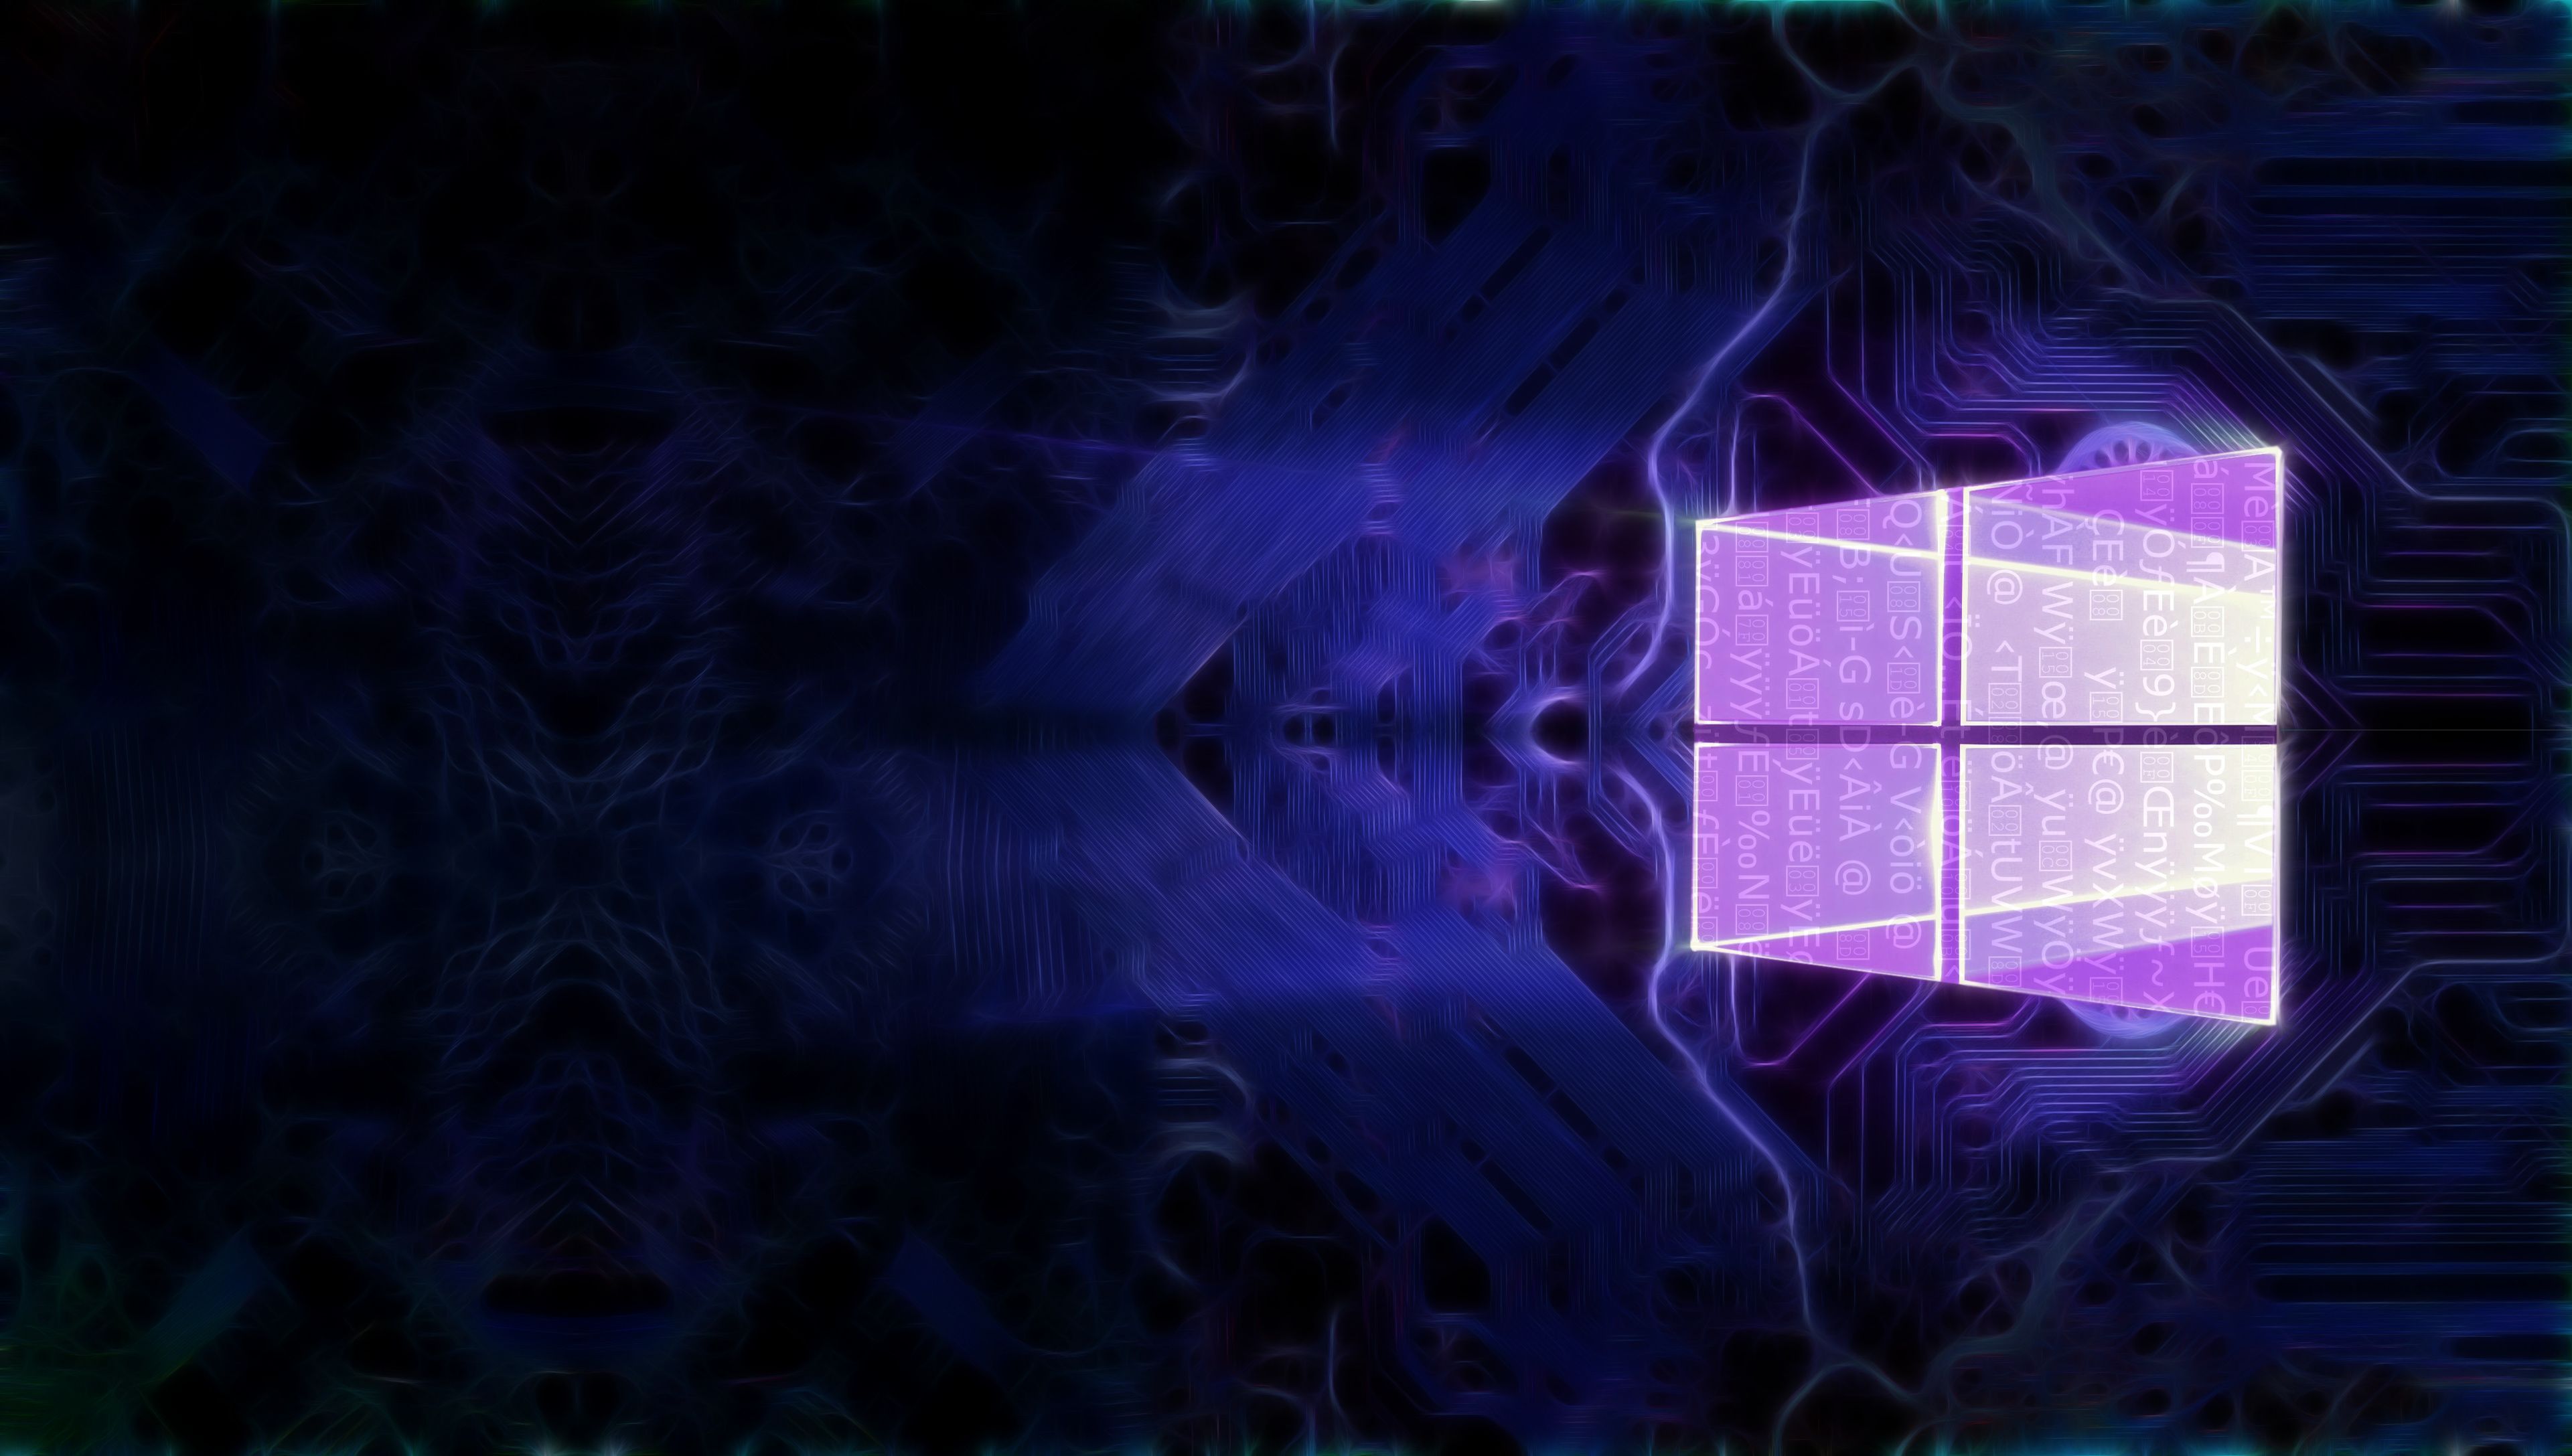 A purple and blue Windows logo on a dark background - Windows 10